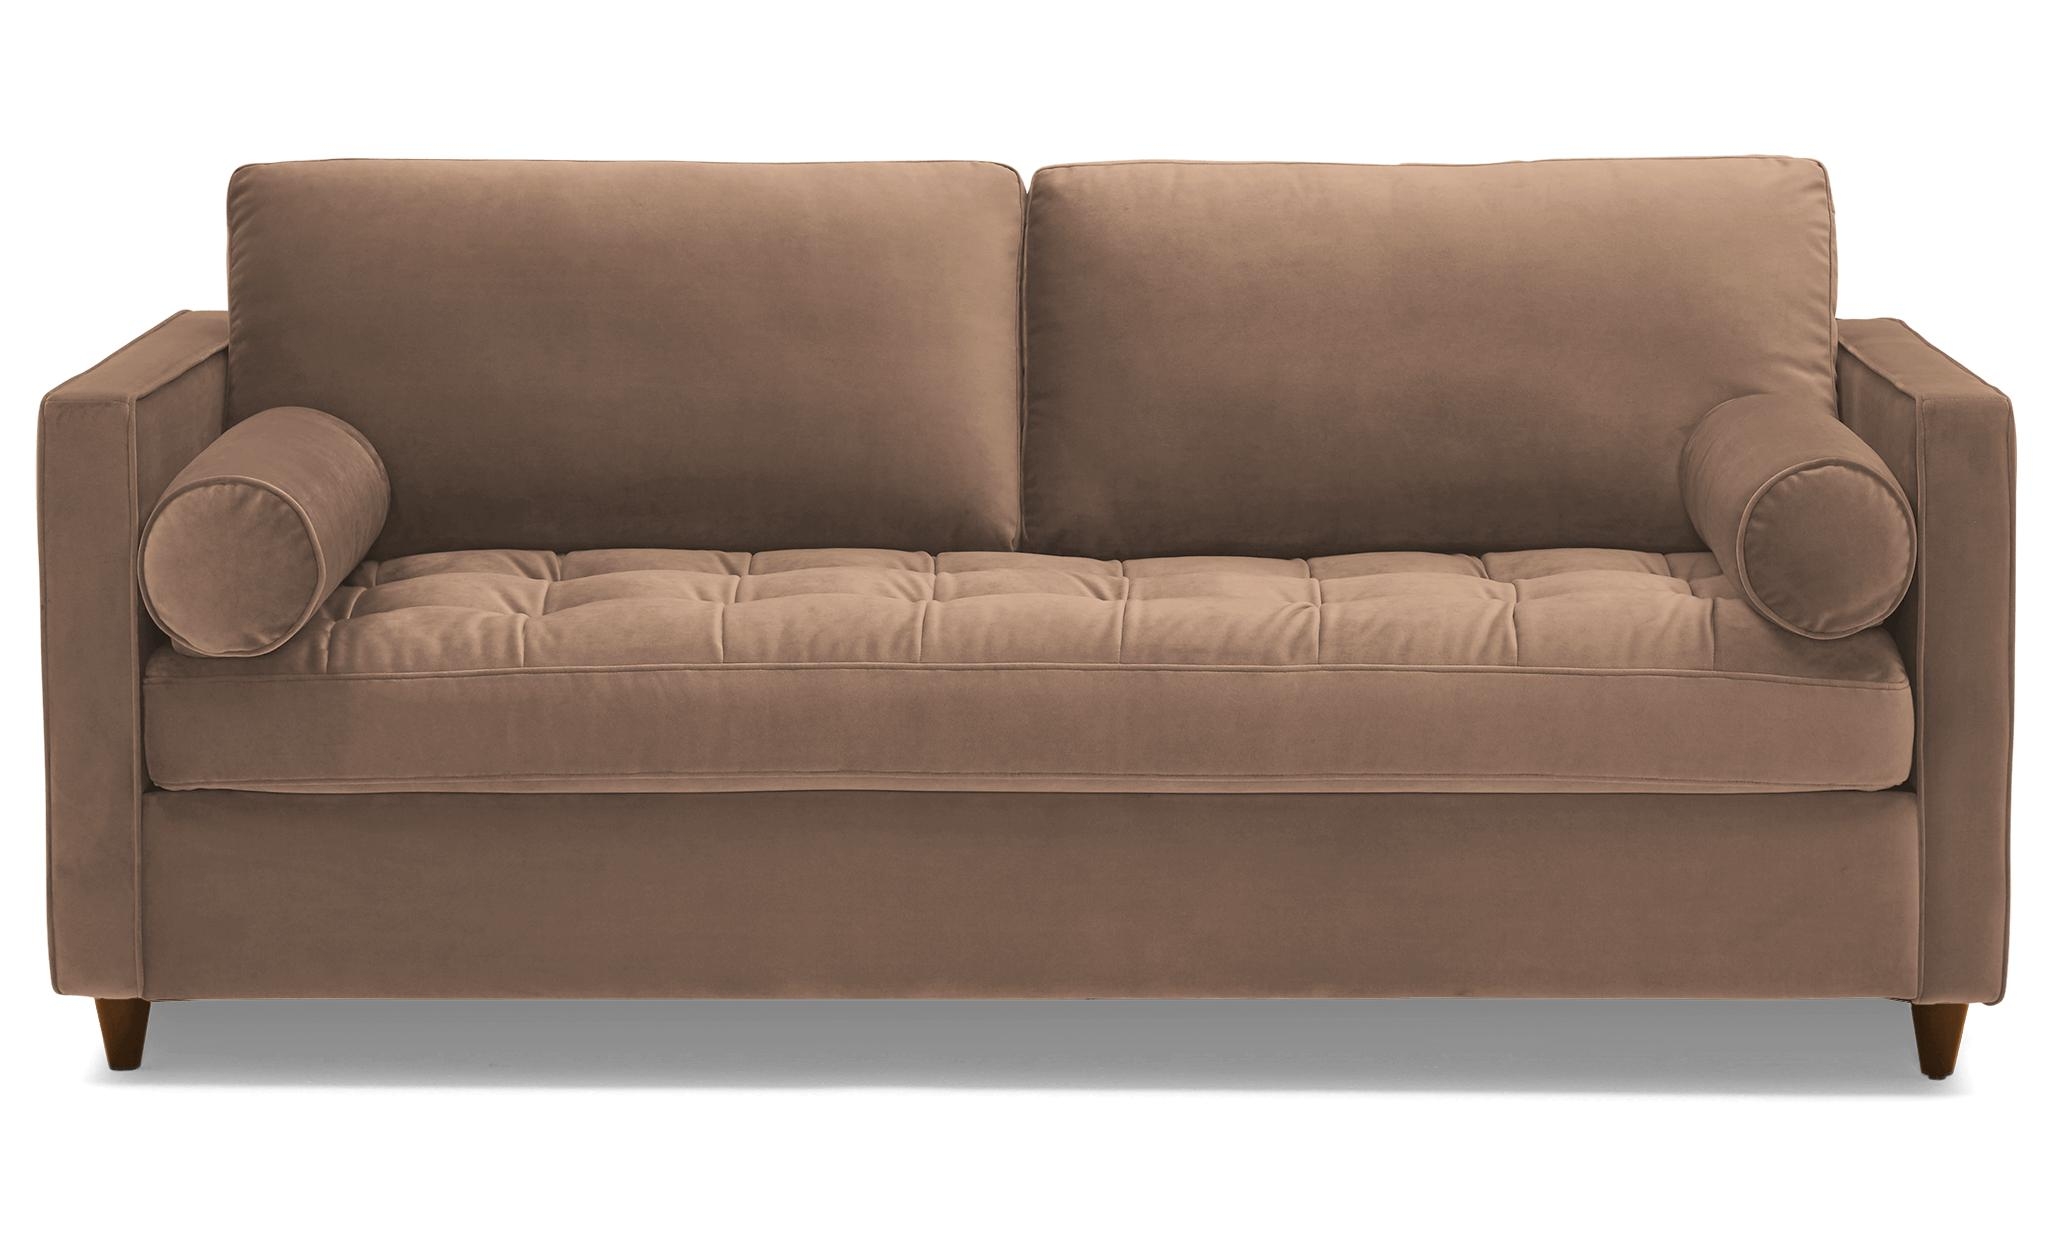 Pink Briar Mid Century Modern Sleeper Sofa - Royale Blush - Mocha - Image 0